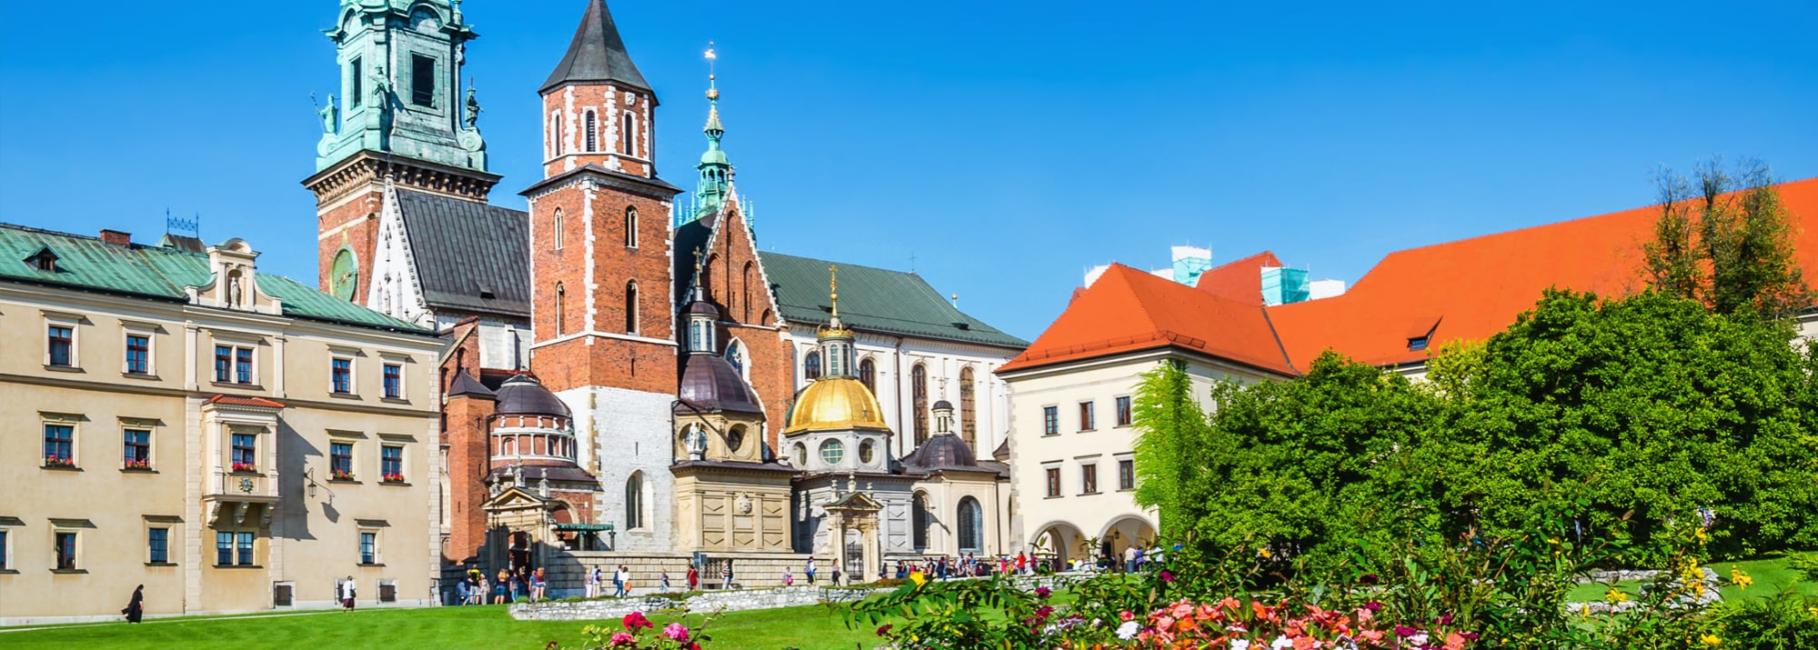 krakow cultural trip header nstie